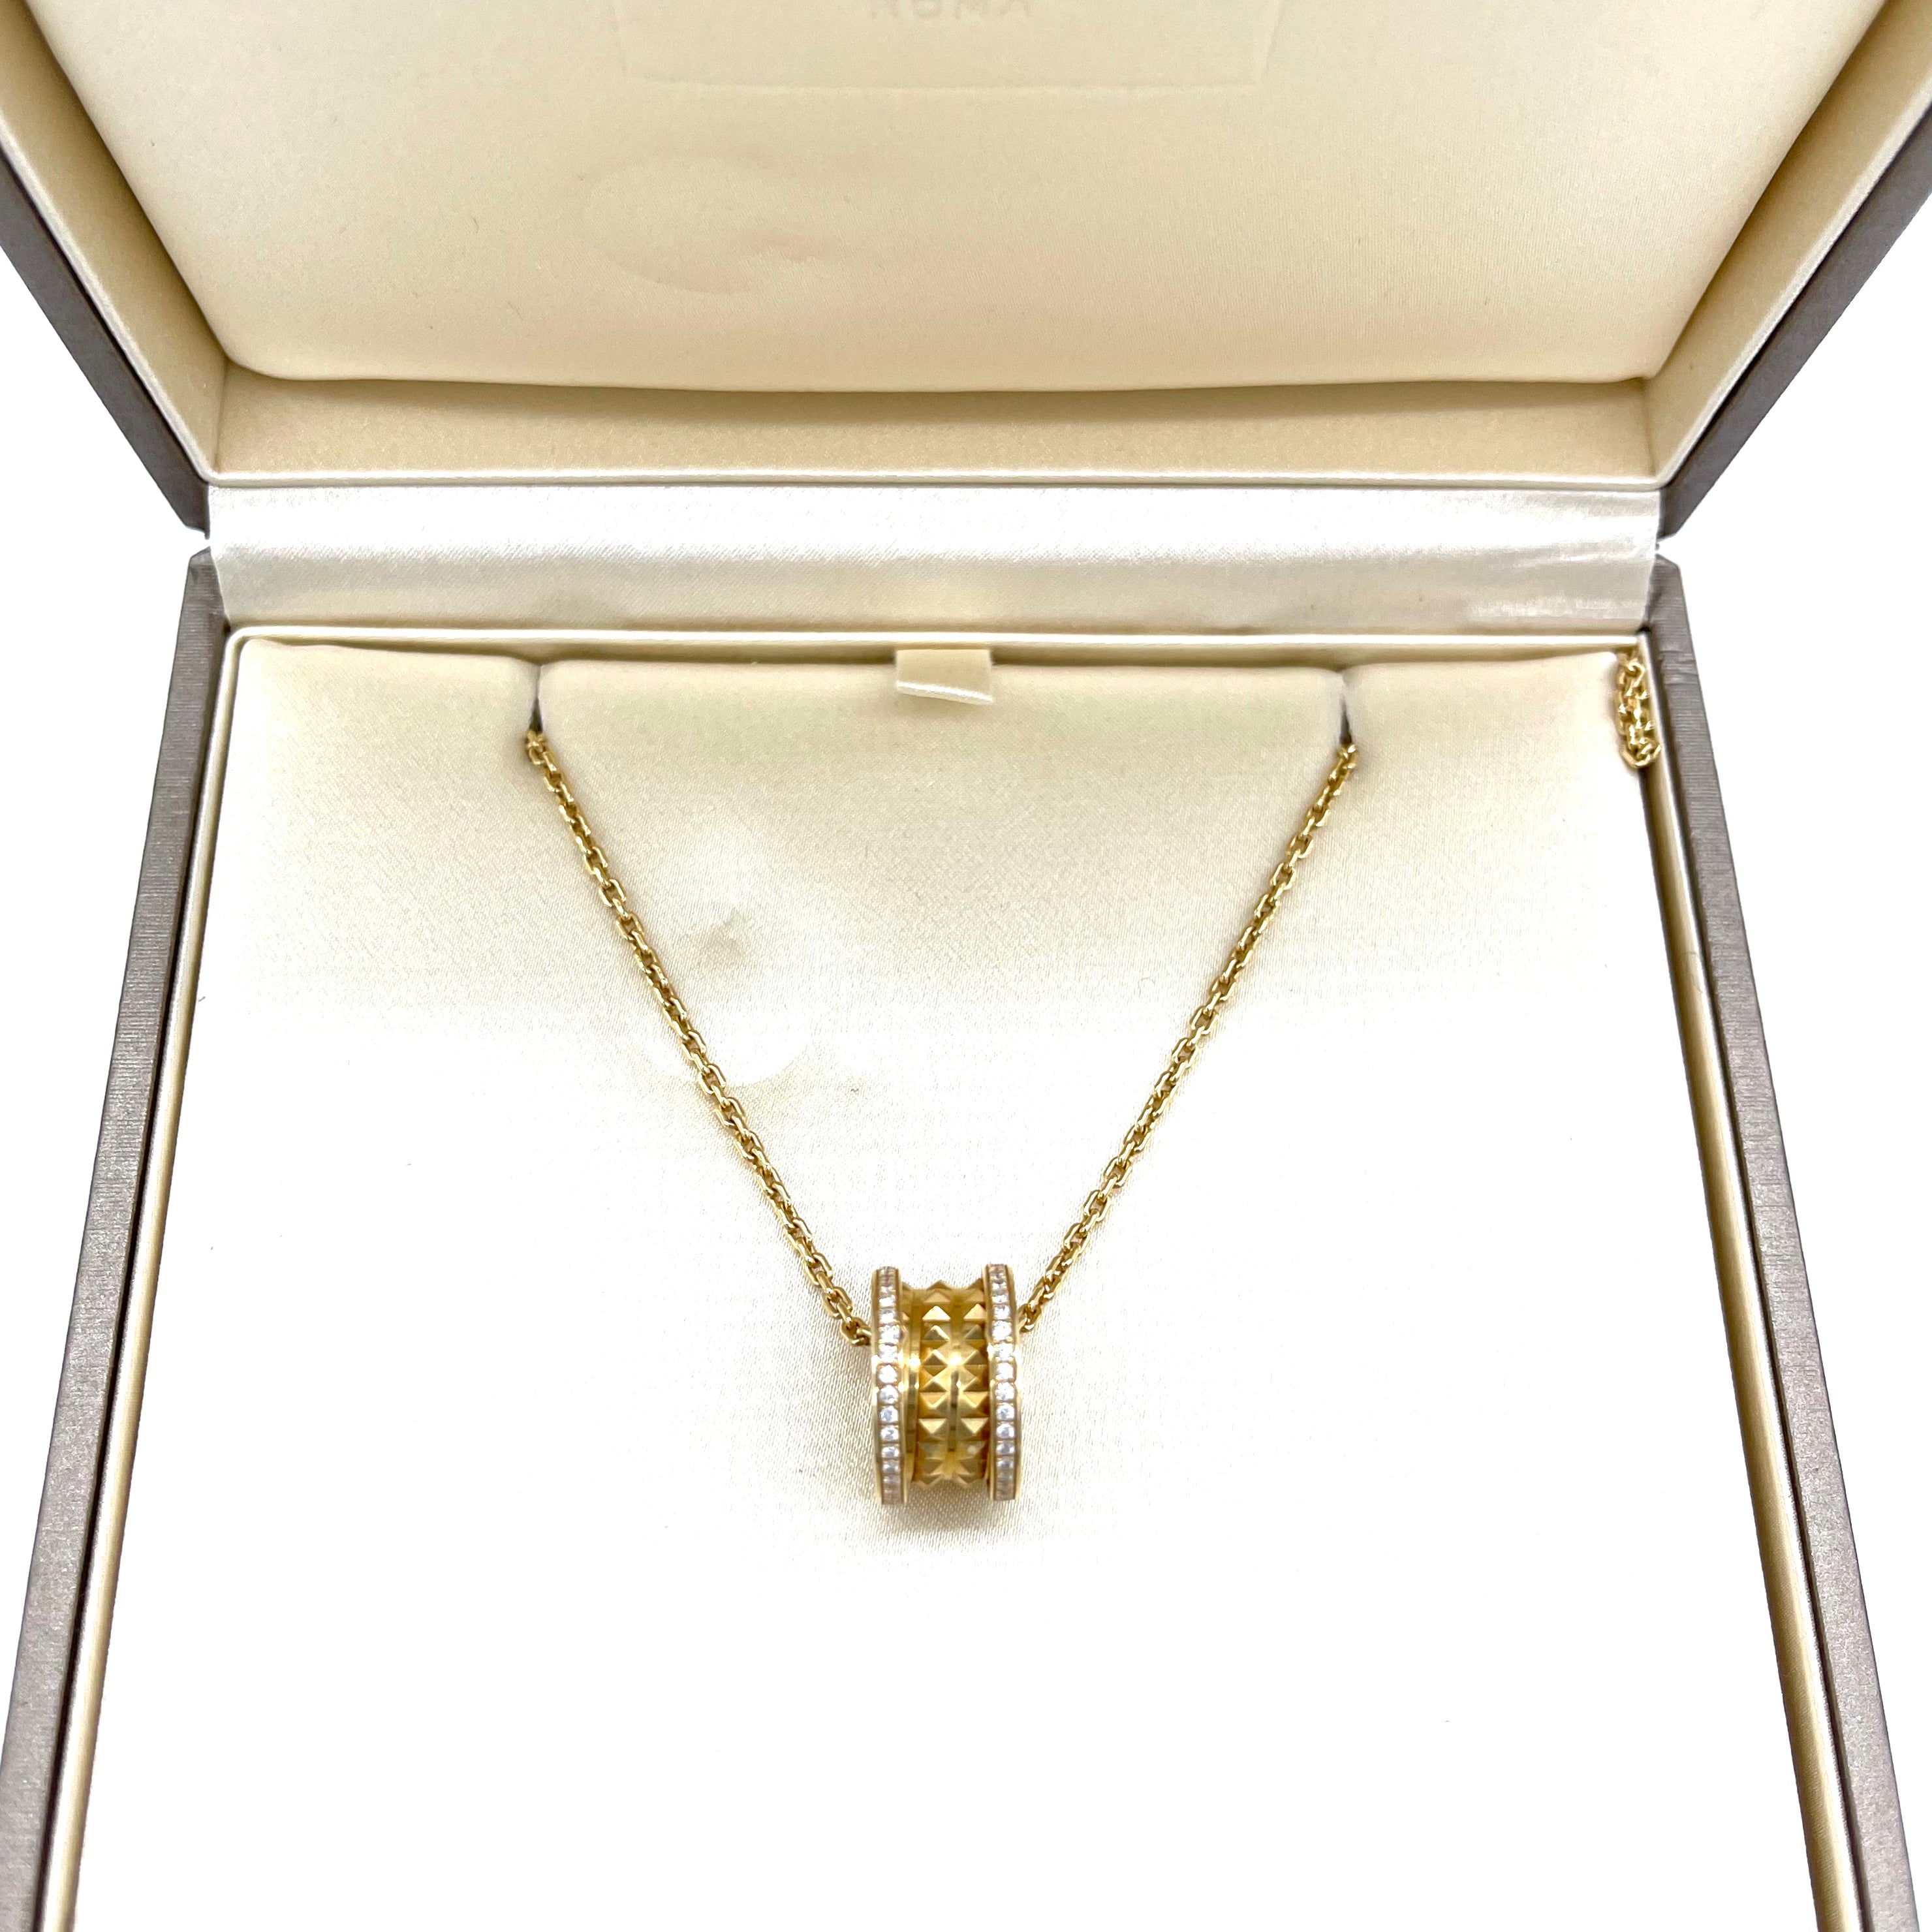 [BRAND NEW]BVLGARI B.ZERO1 ROCK 18K YELLOW GOLD DIAMOND PENDANT NECKLACE